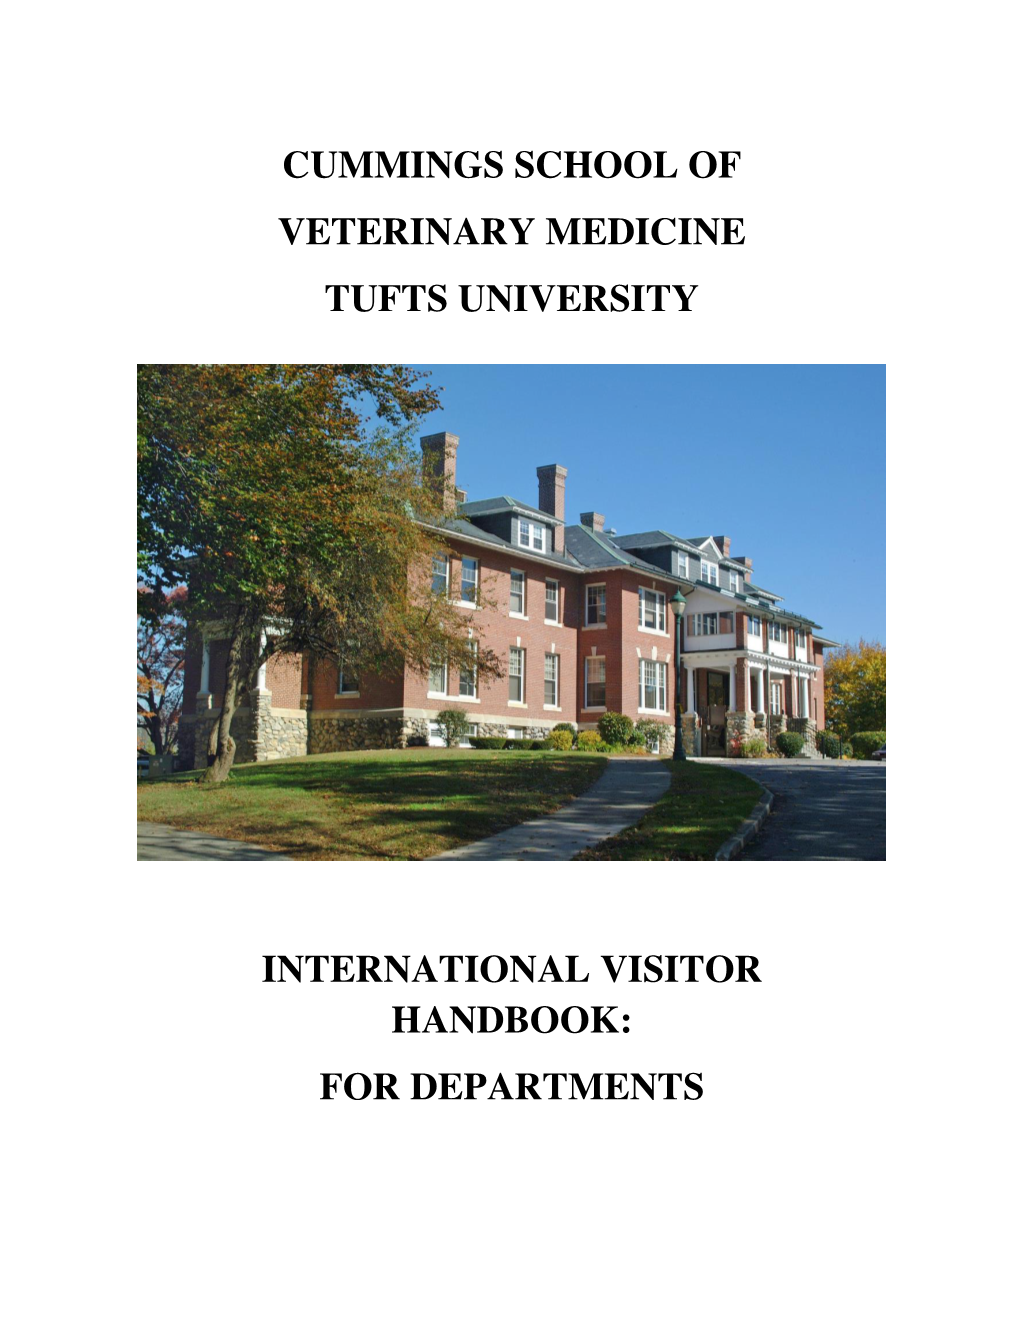 Cummings School of Veterinary Medicine Tufts University International Visitor Handbook: for Departments